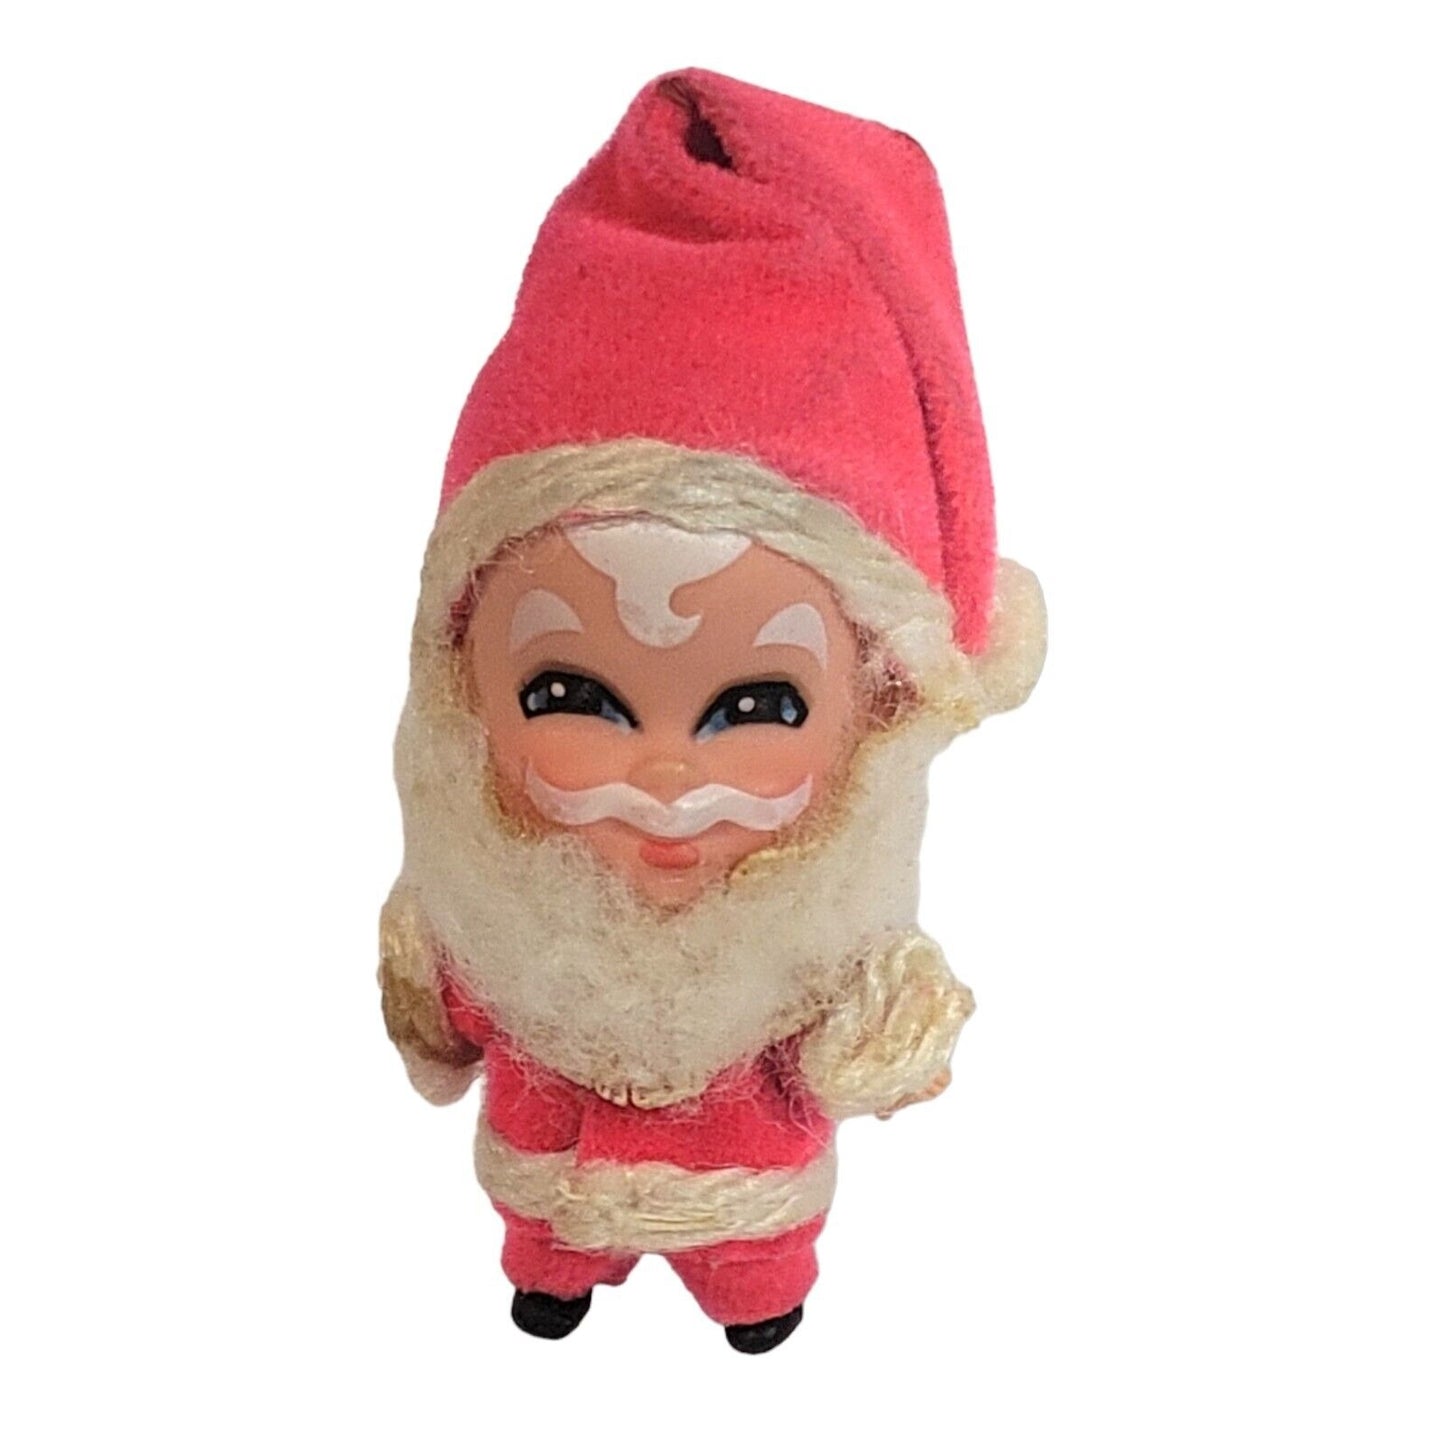 Vintage 1968 Mattel Liddle Kiddles Santa Clause Christmas